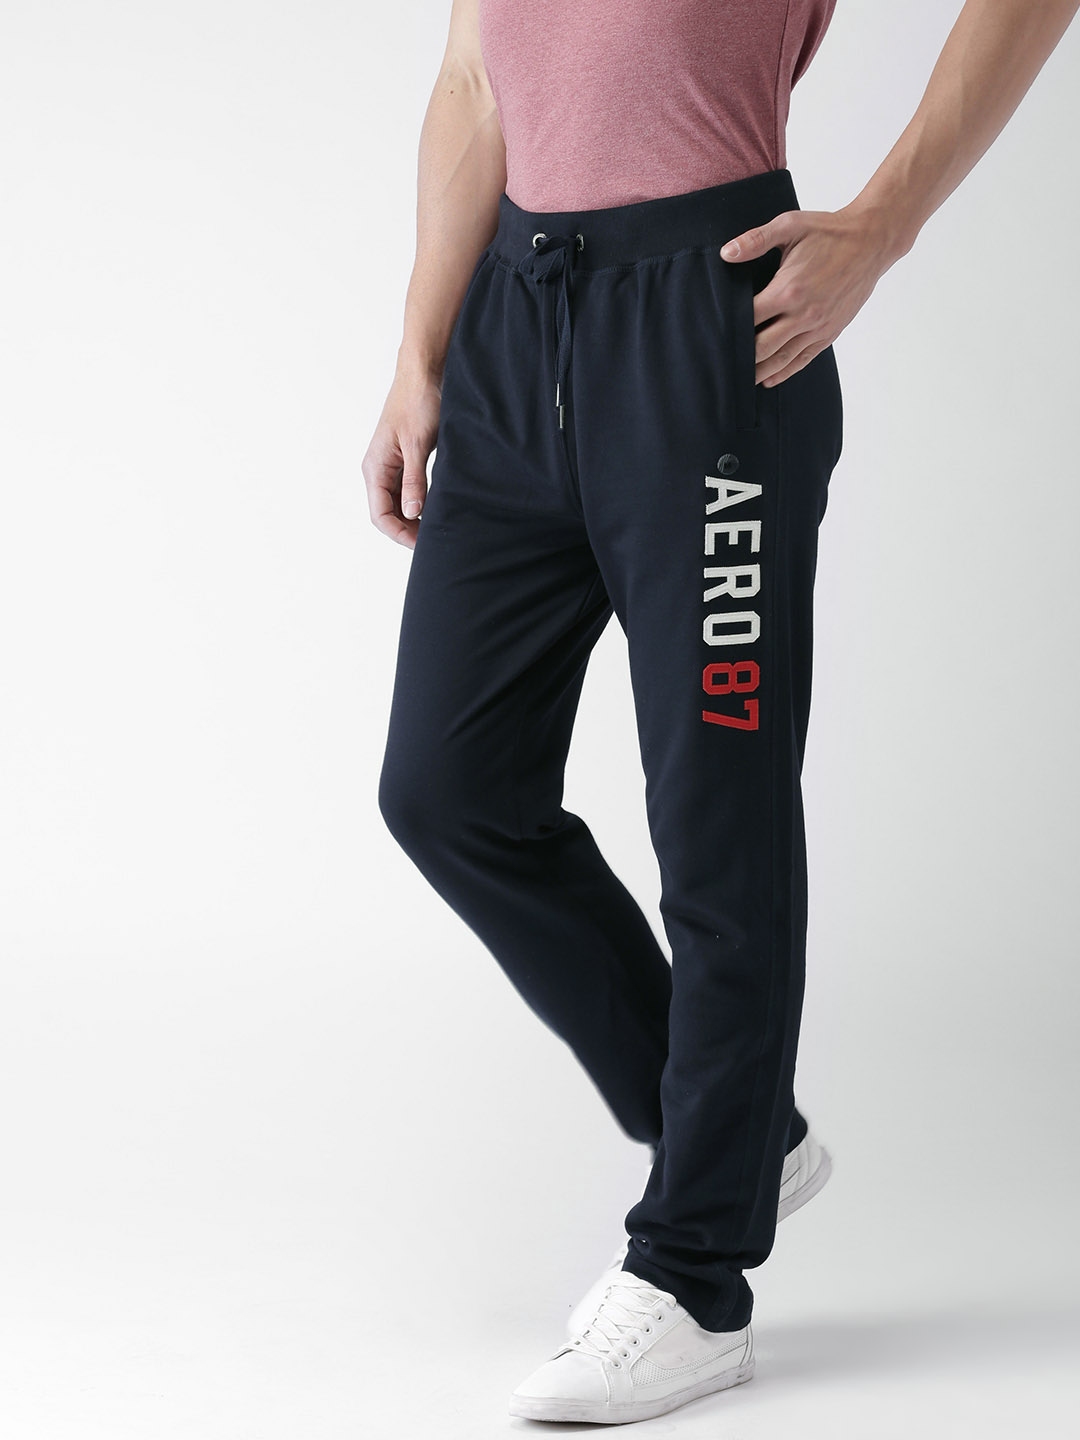 Buy a Womens Aeropostale Bootcut Yoga Pants Online | TagsWeekly.com, TW4